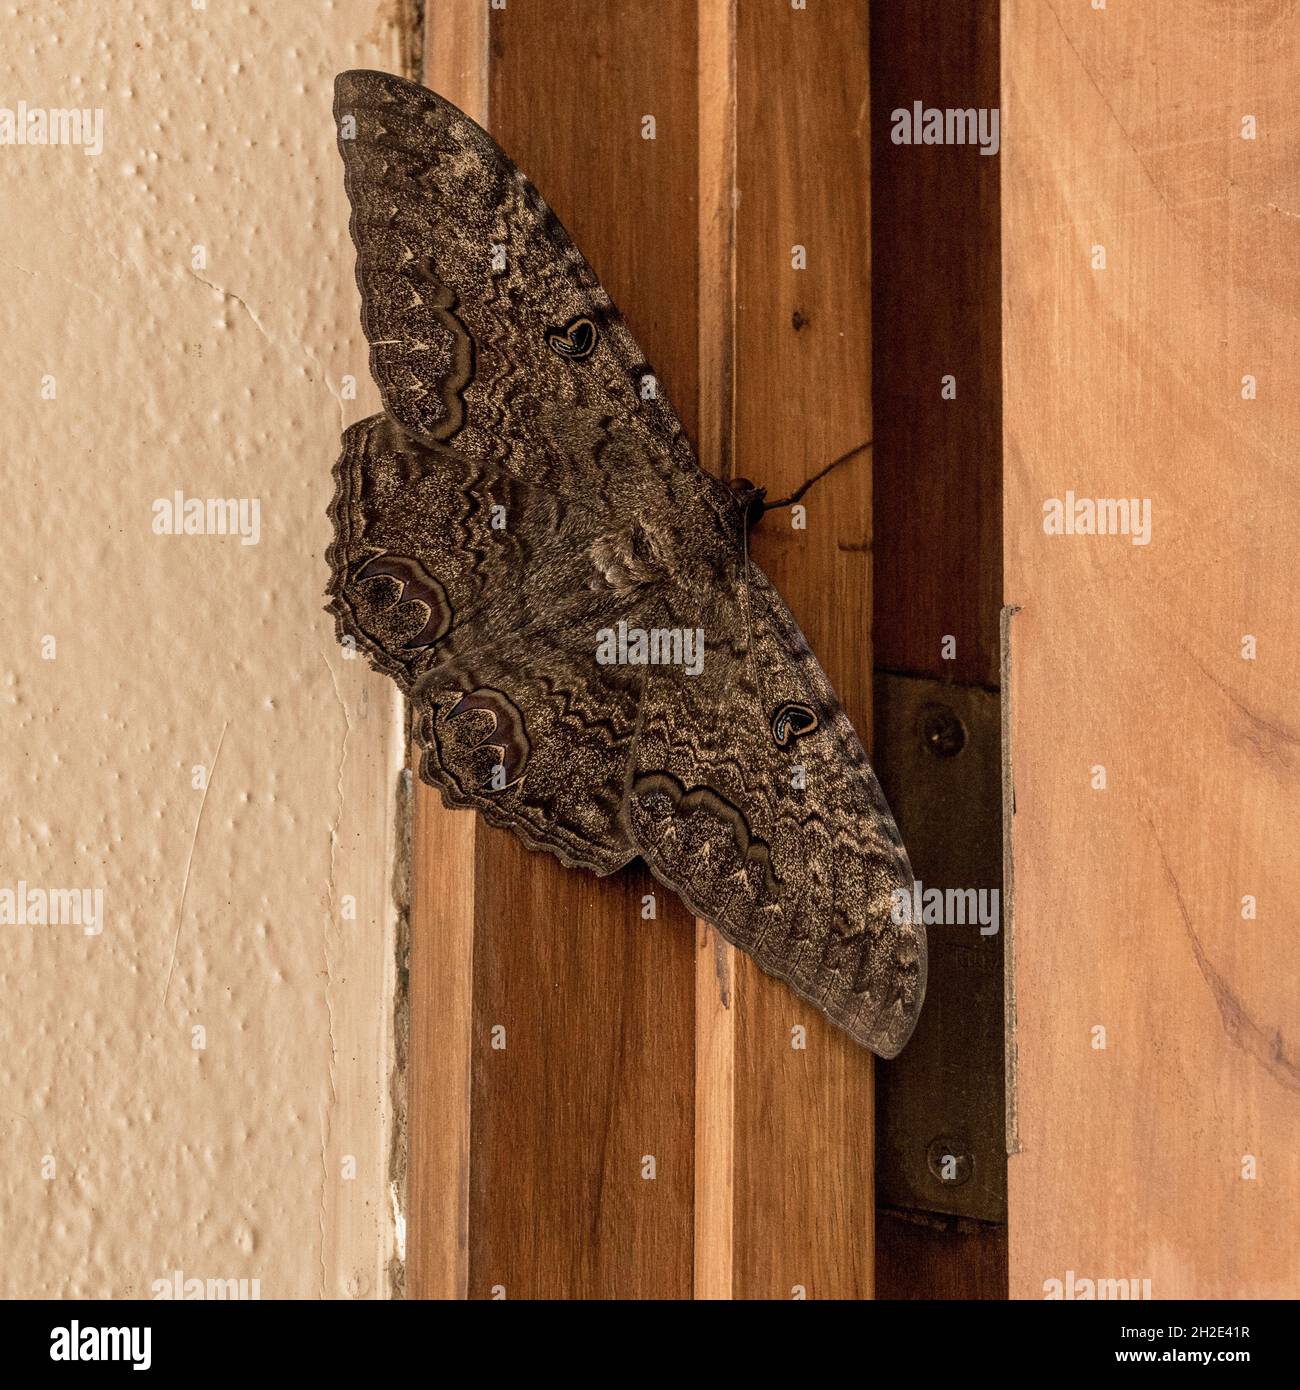 Closeup shot of a moth sitting between the door of the room Stock Photo